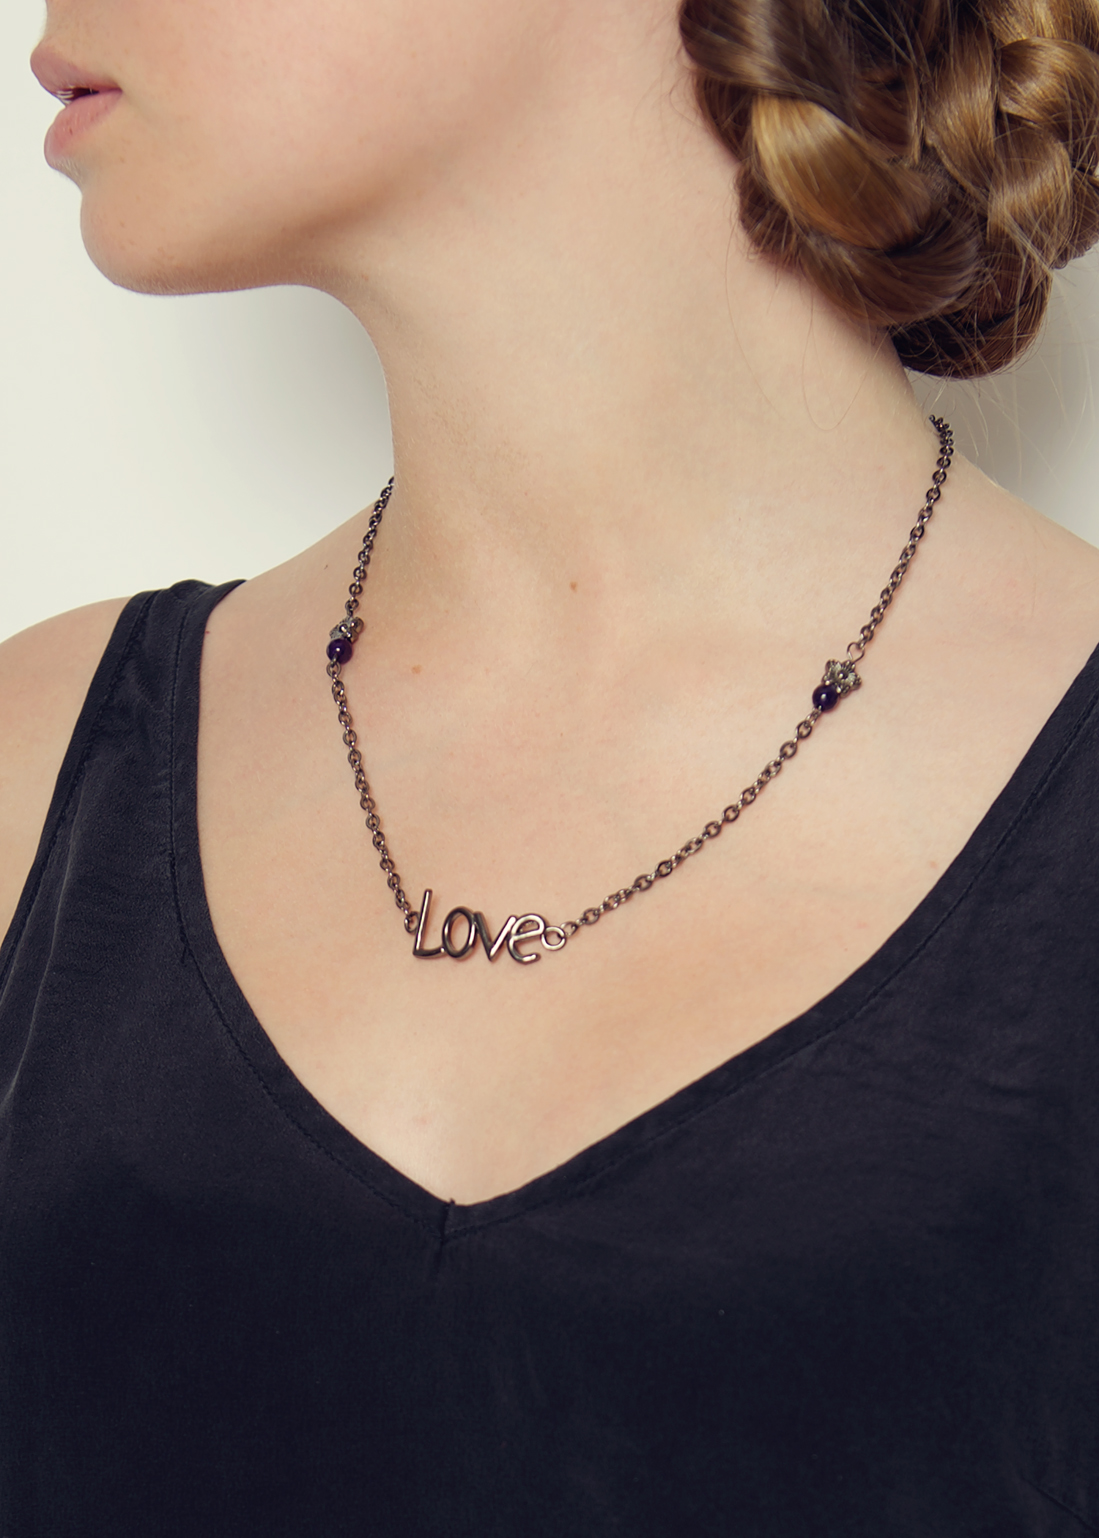 Amethyst love necklace